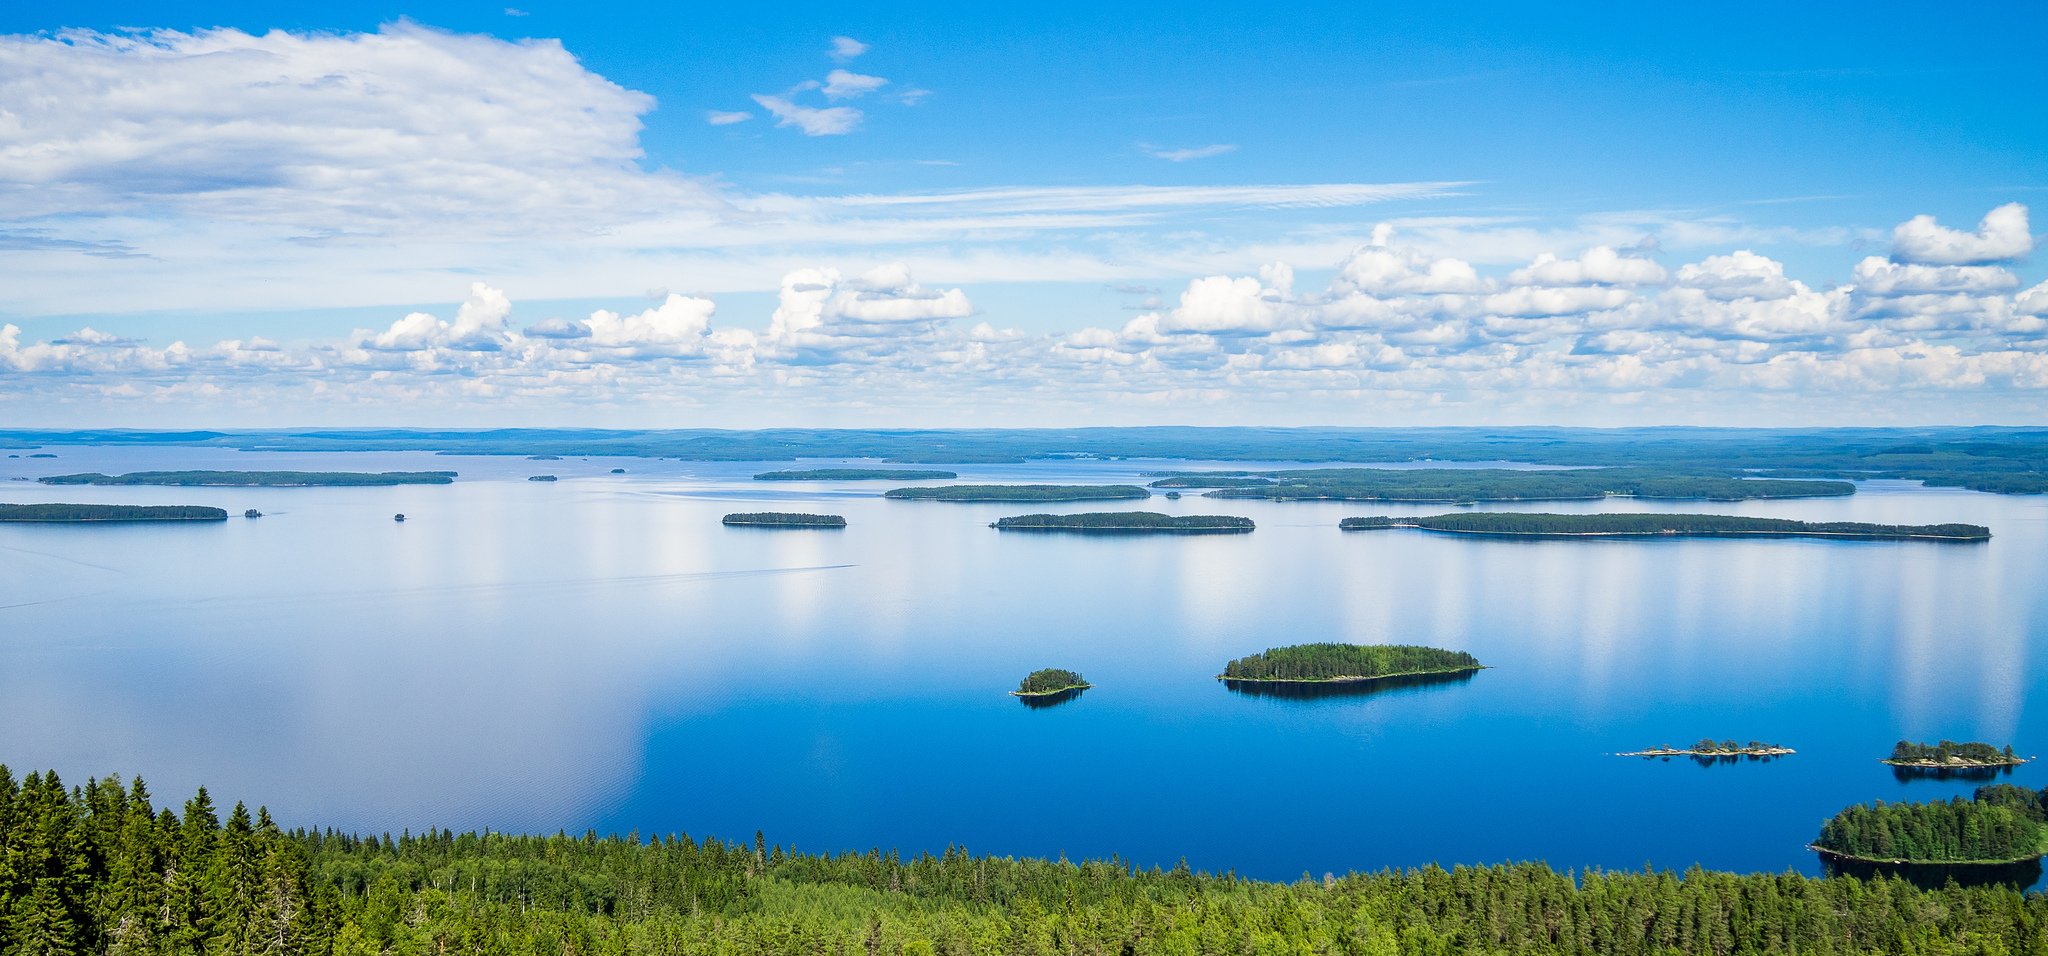 Республика тысячи озер. Озеро Пиелинен Финляндия. Озеро Сайма Финляндия. Озеро Суоми Финляндия. Озеро Штерн Финляндия.